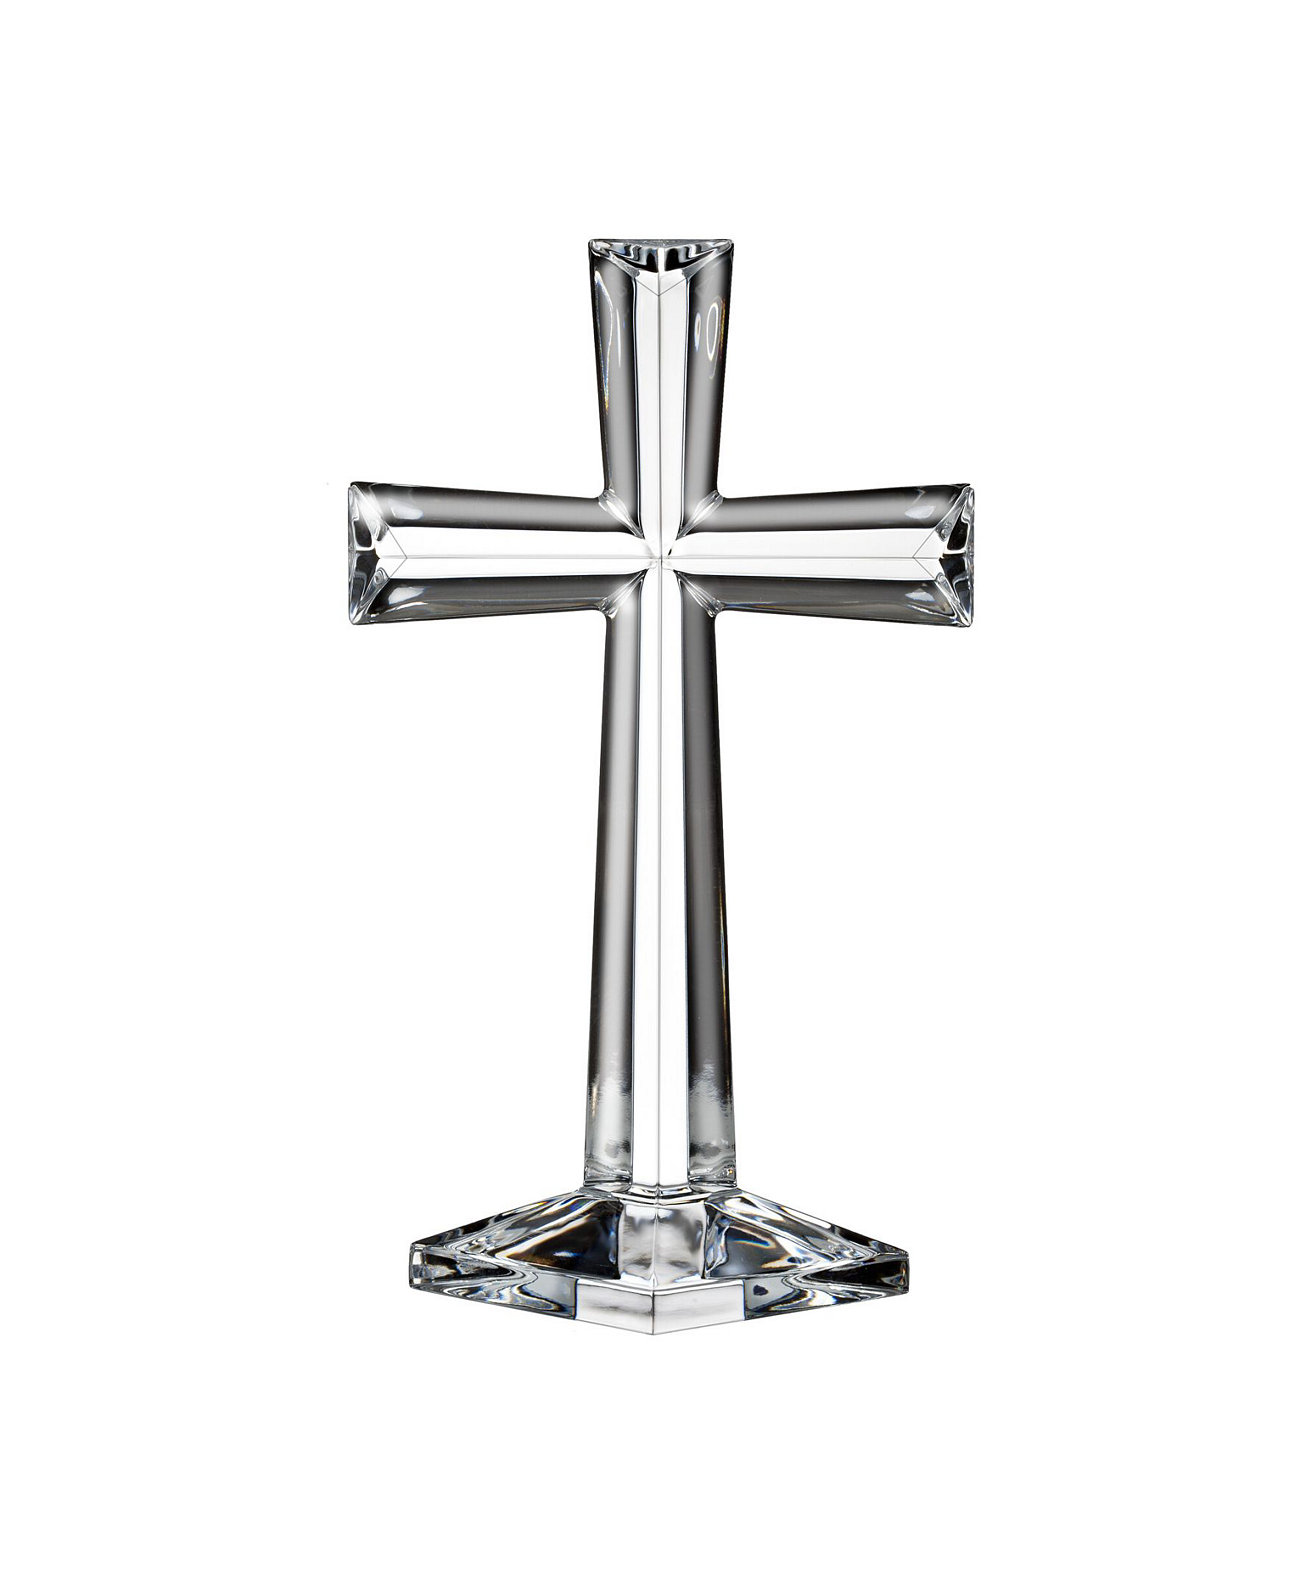 Cross standing. Хрустальный крест. Кристальный крест. Торговый стенд крест №1. Waterford Crystal купить крест.